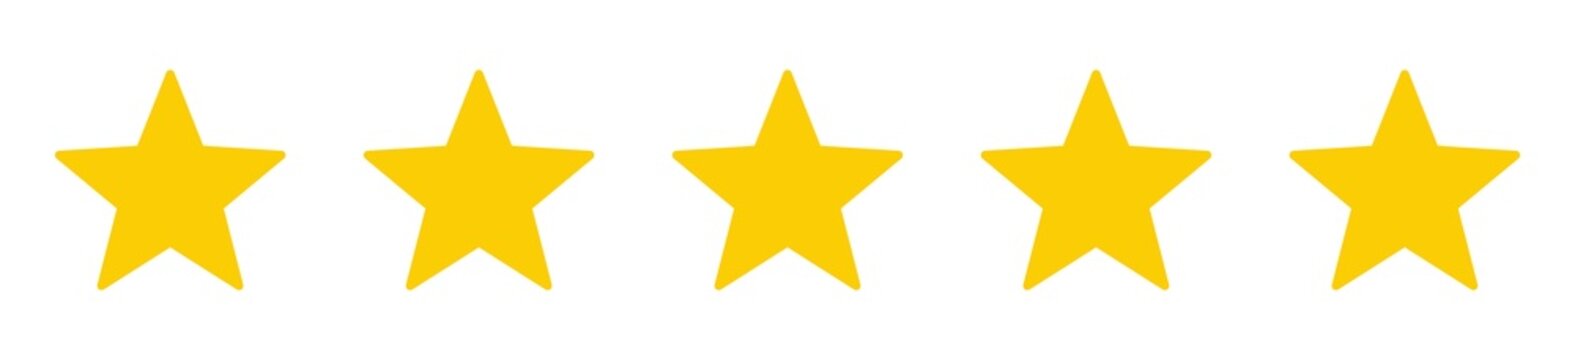 5 stars icon. five star sign, rating symbol. vector illustration